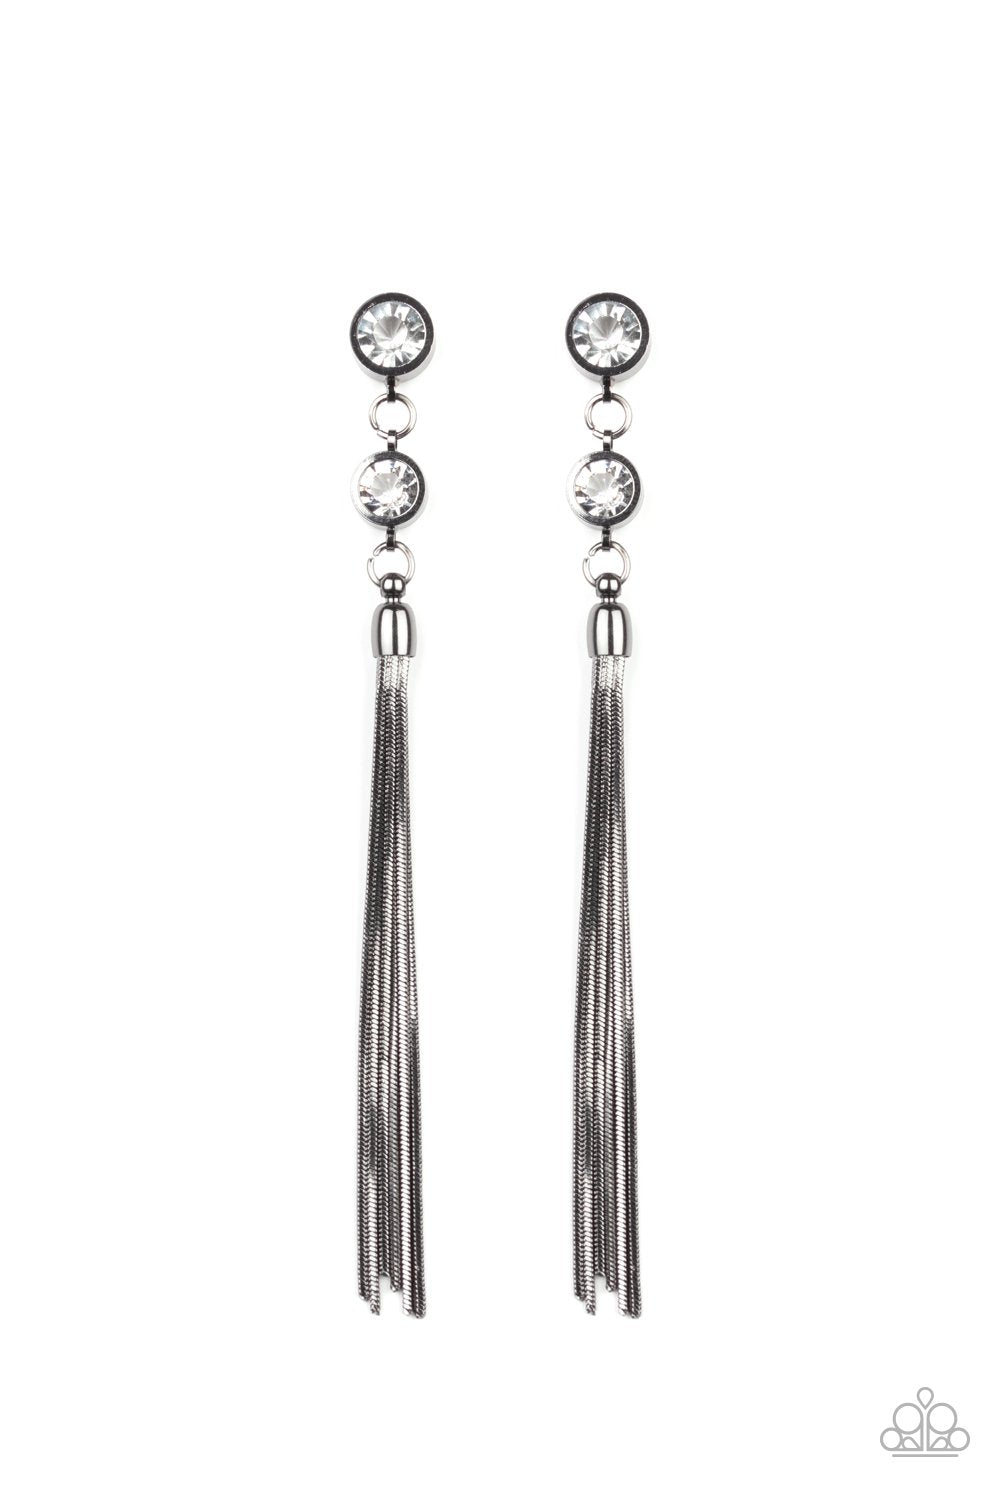 Tassel Twinkle Gunmetal Black and White Rhinestone Chain Earrings - Paparazzi Accessories-CarasShop.com - $5 Jewelry by Cara Jewels